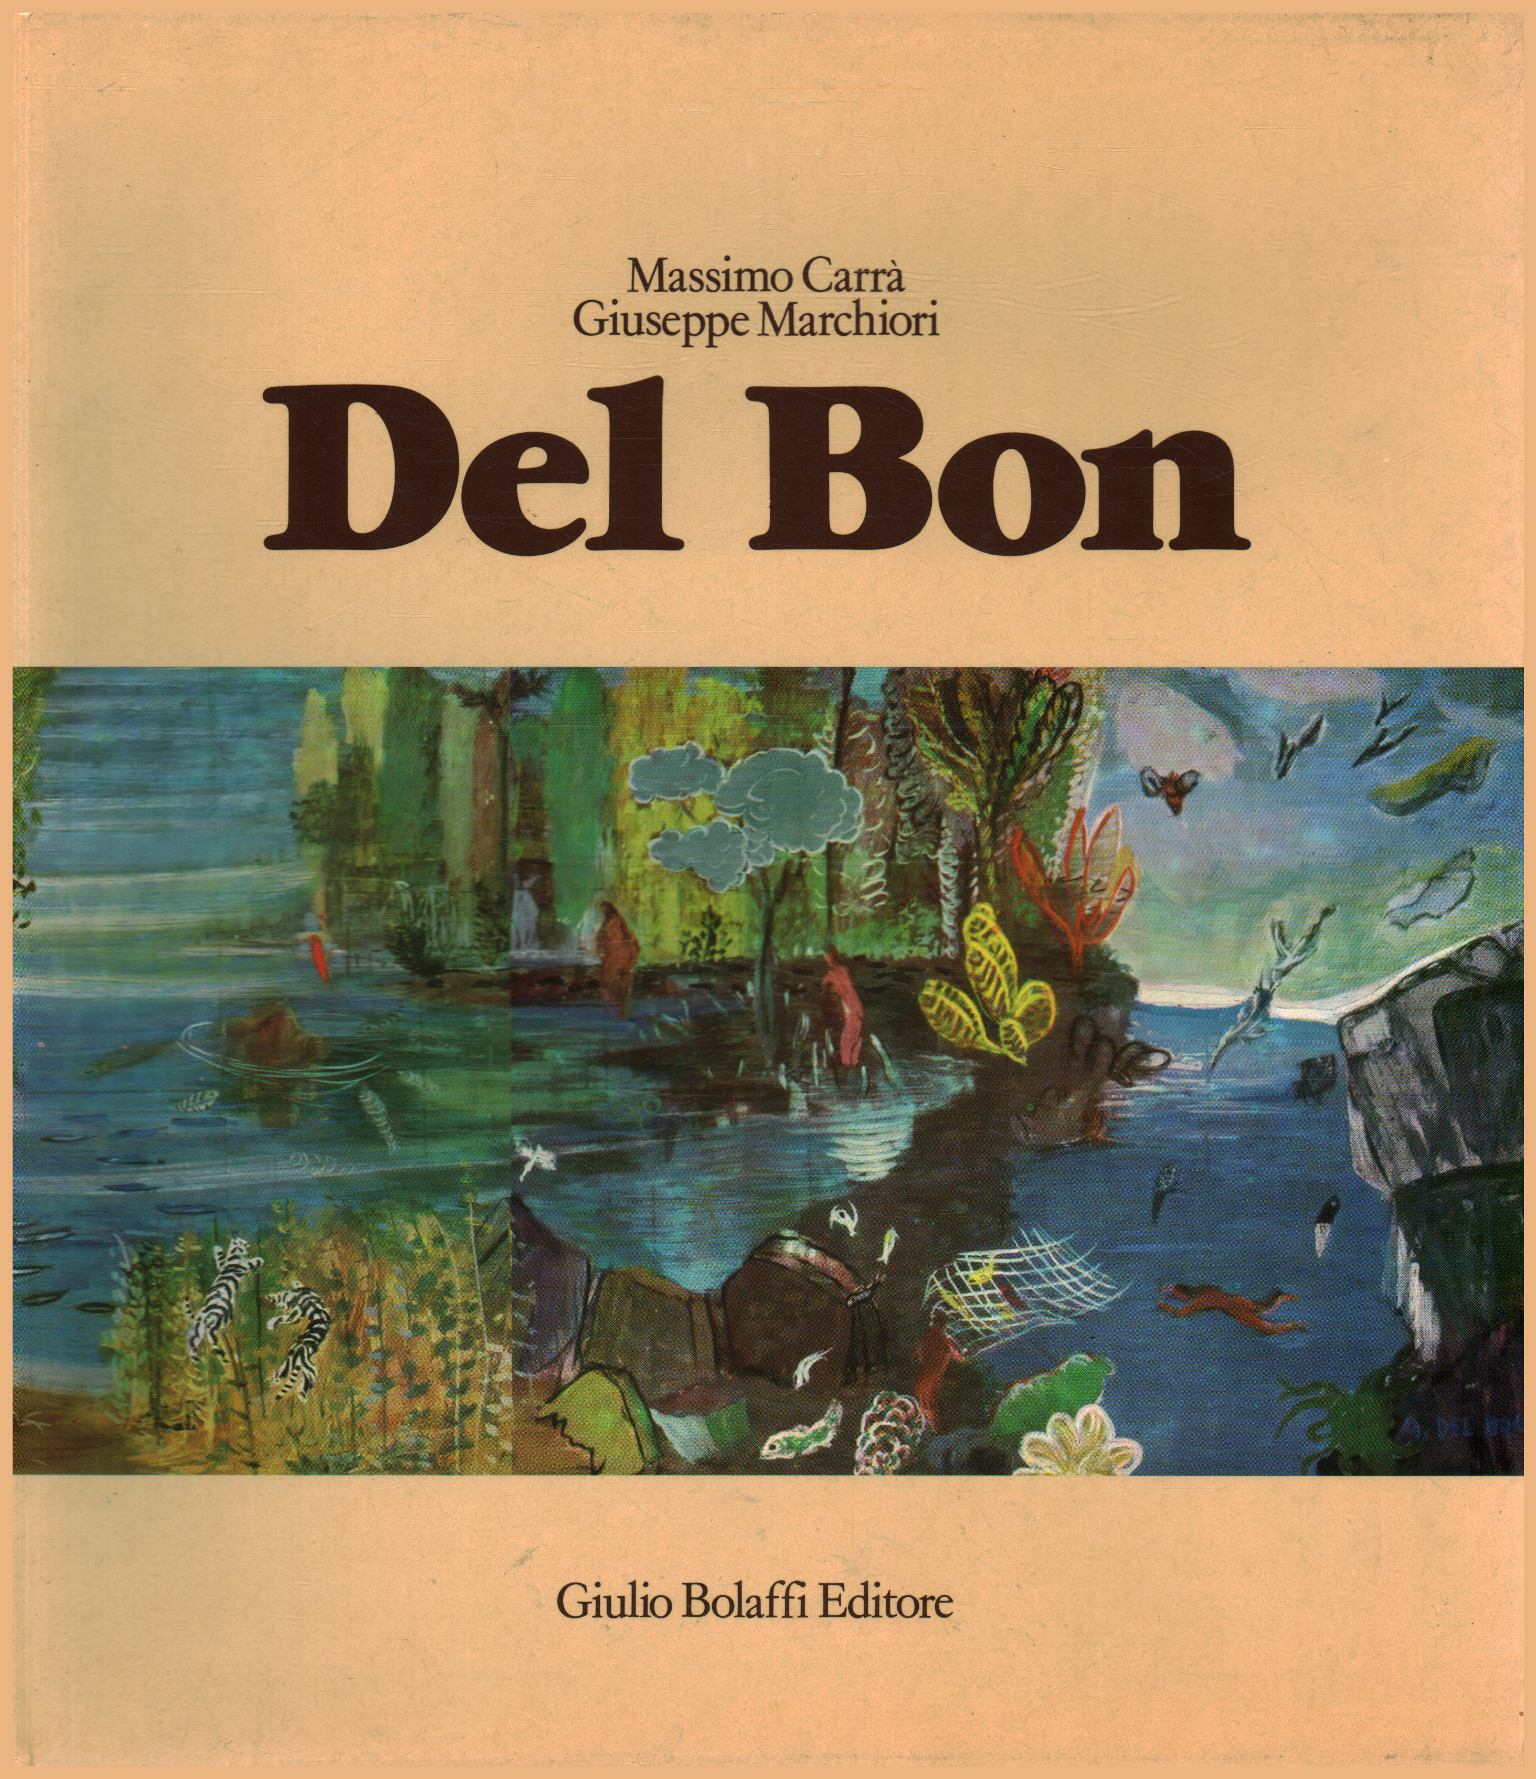 Del Bon. All the works. Third volume 1945-1952, Massimo Carrà Giuseppe Marchiori